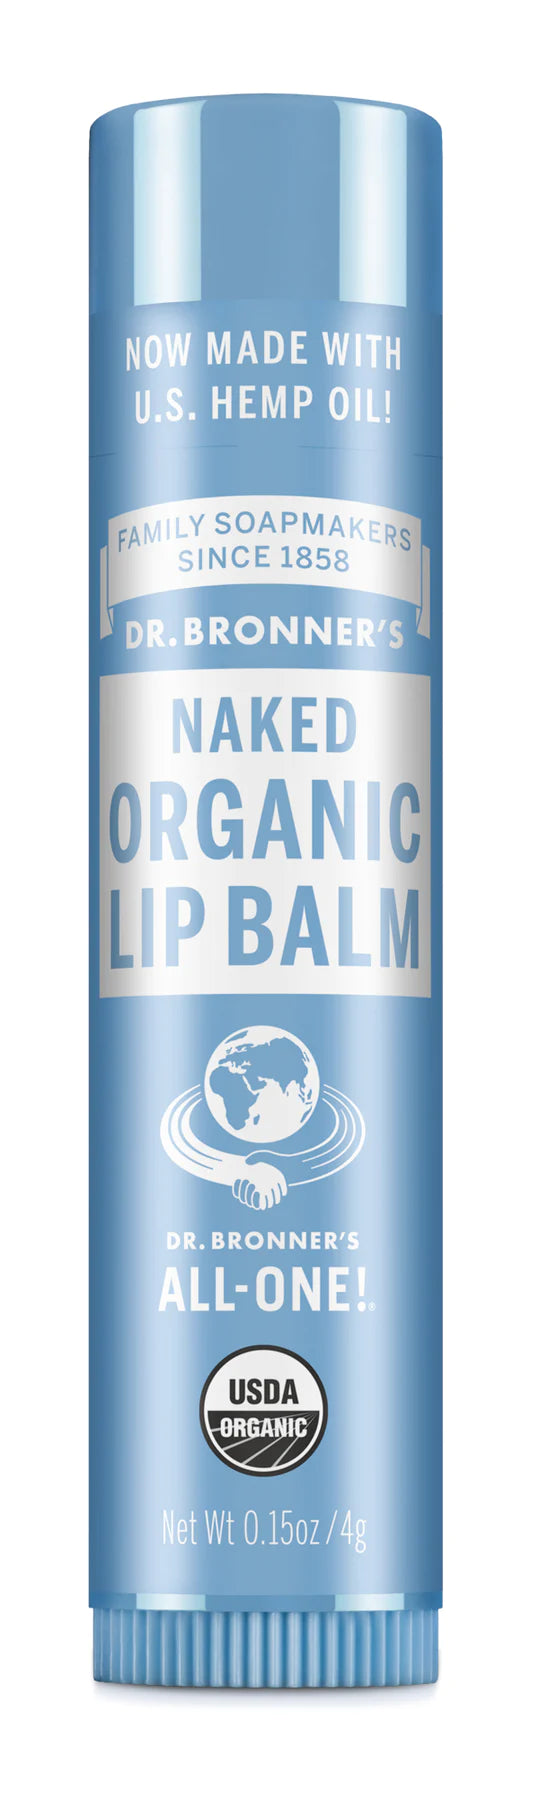 Organic Lip Balm Naked by Dr Bronner's, 4g